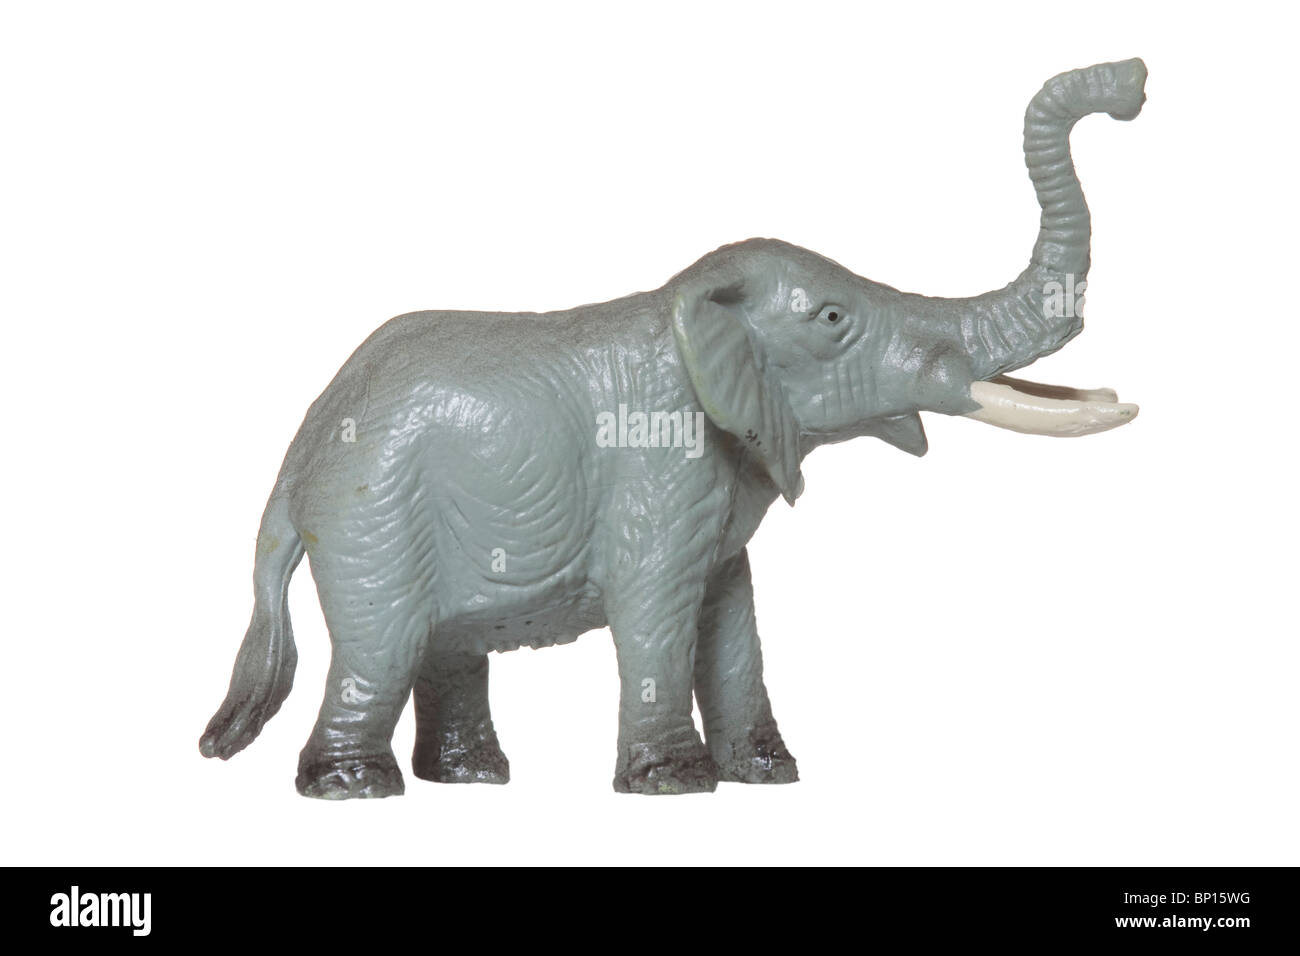 Toy elephant Stock Photo